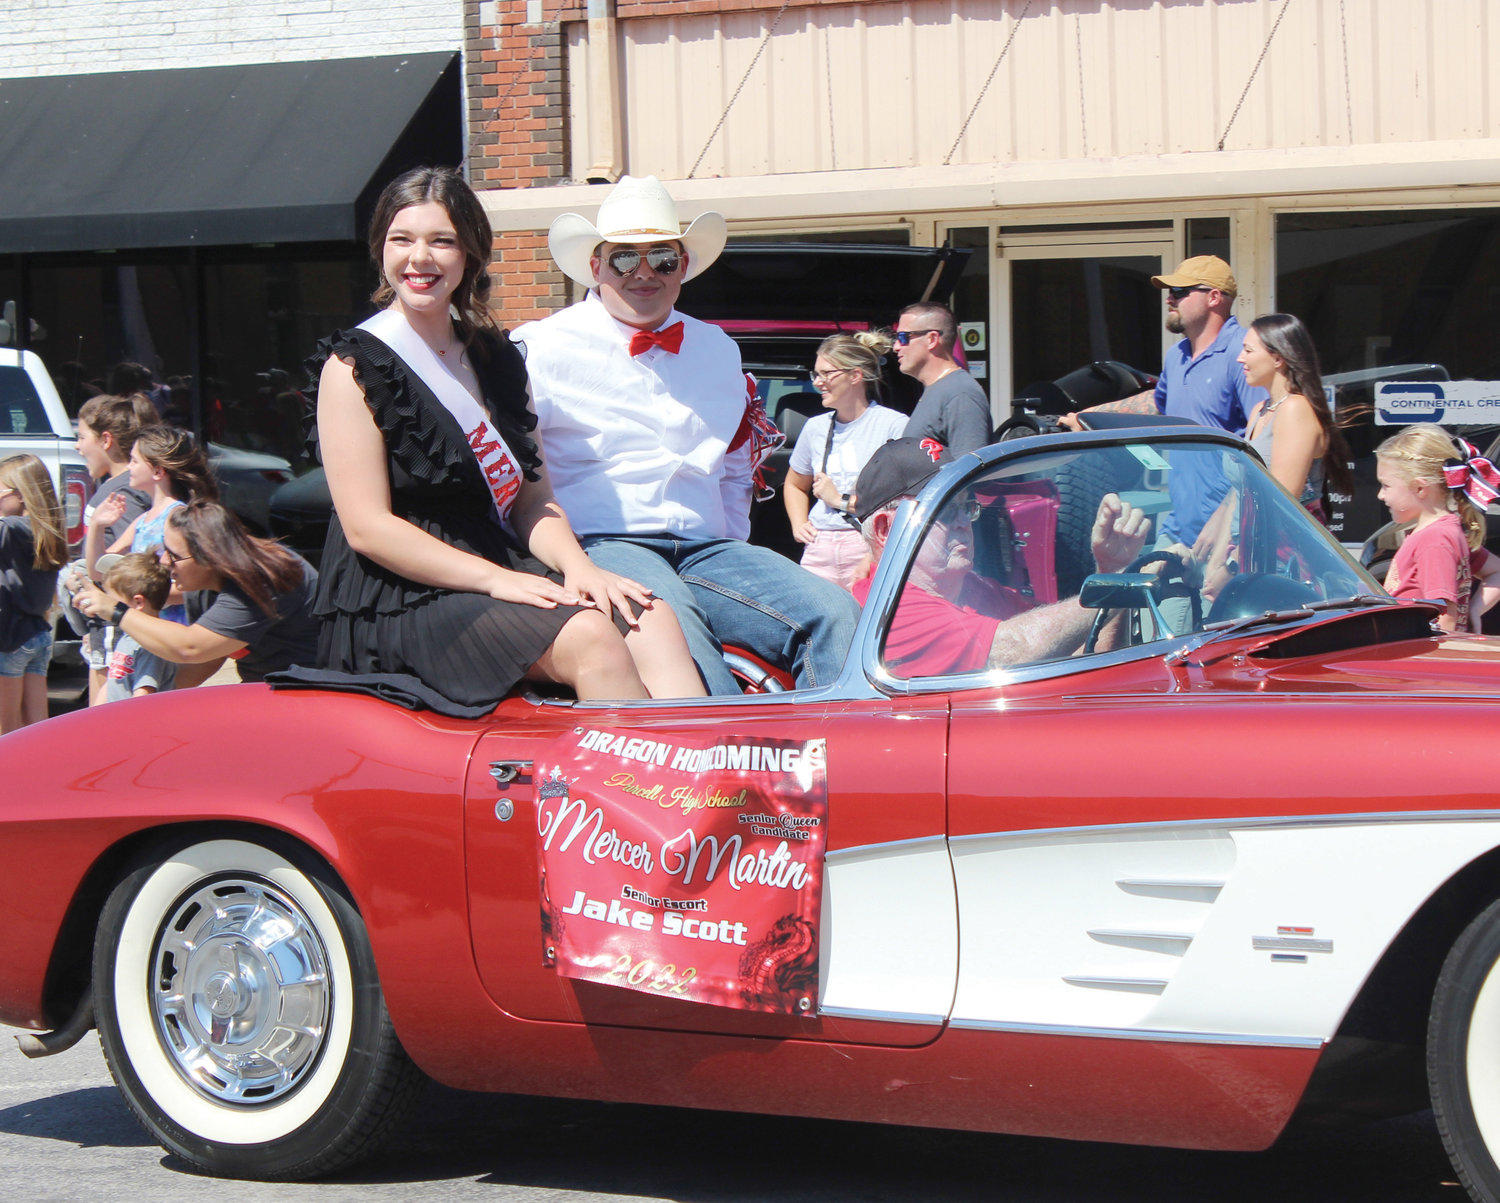 Mercer Martin and her escort, Jake Scott, were seated in a vintage Corvette.